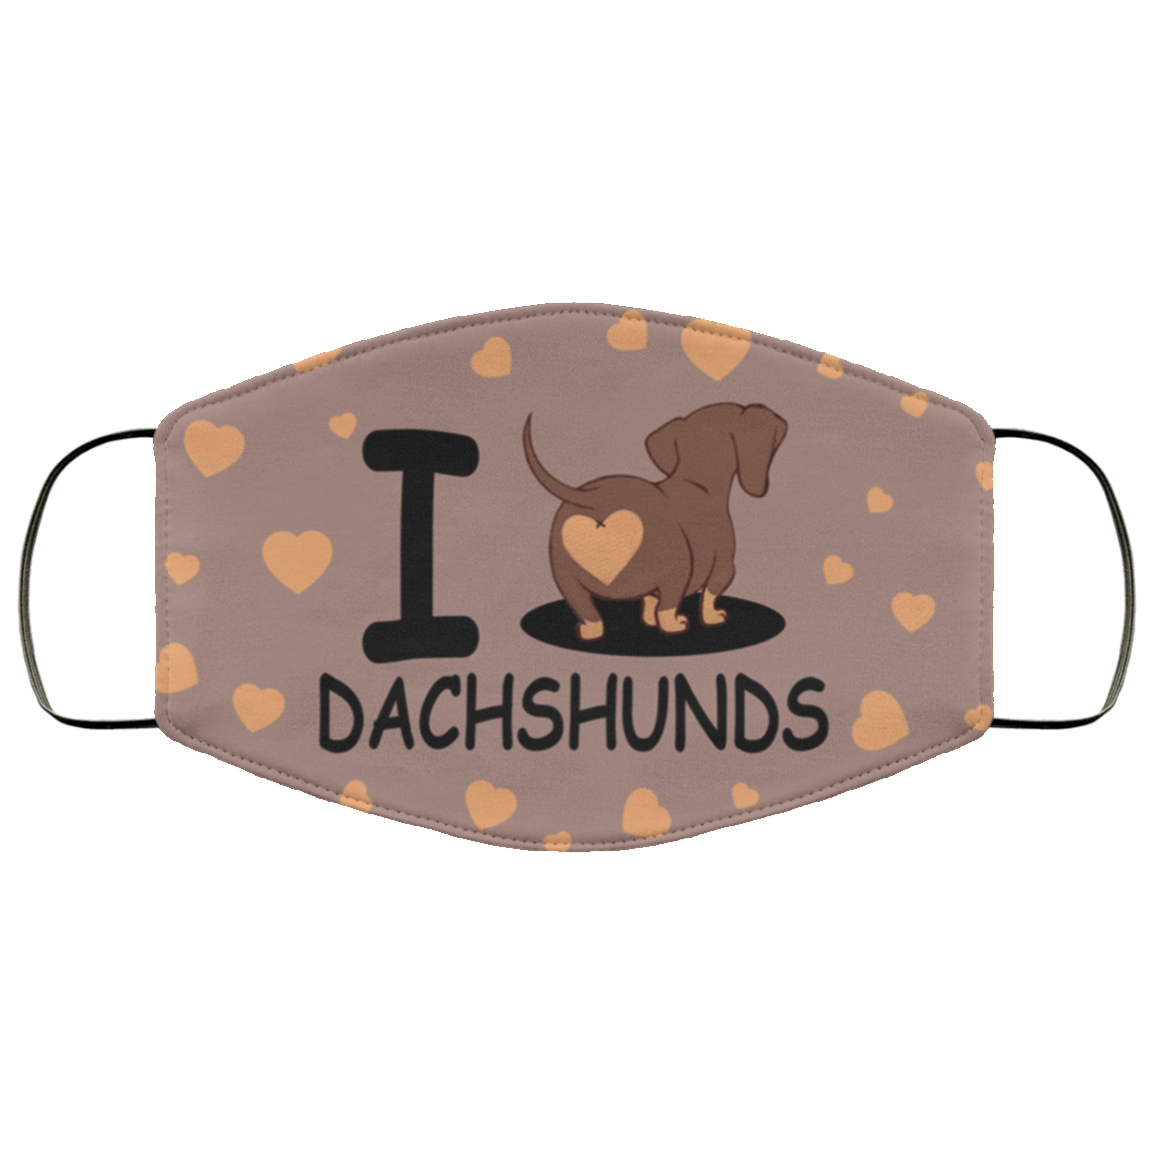 I Love Dachshunds Face Mask